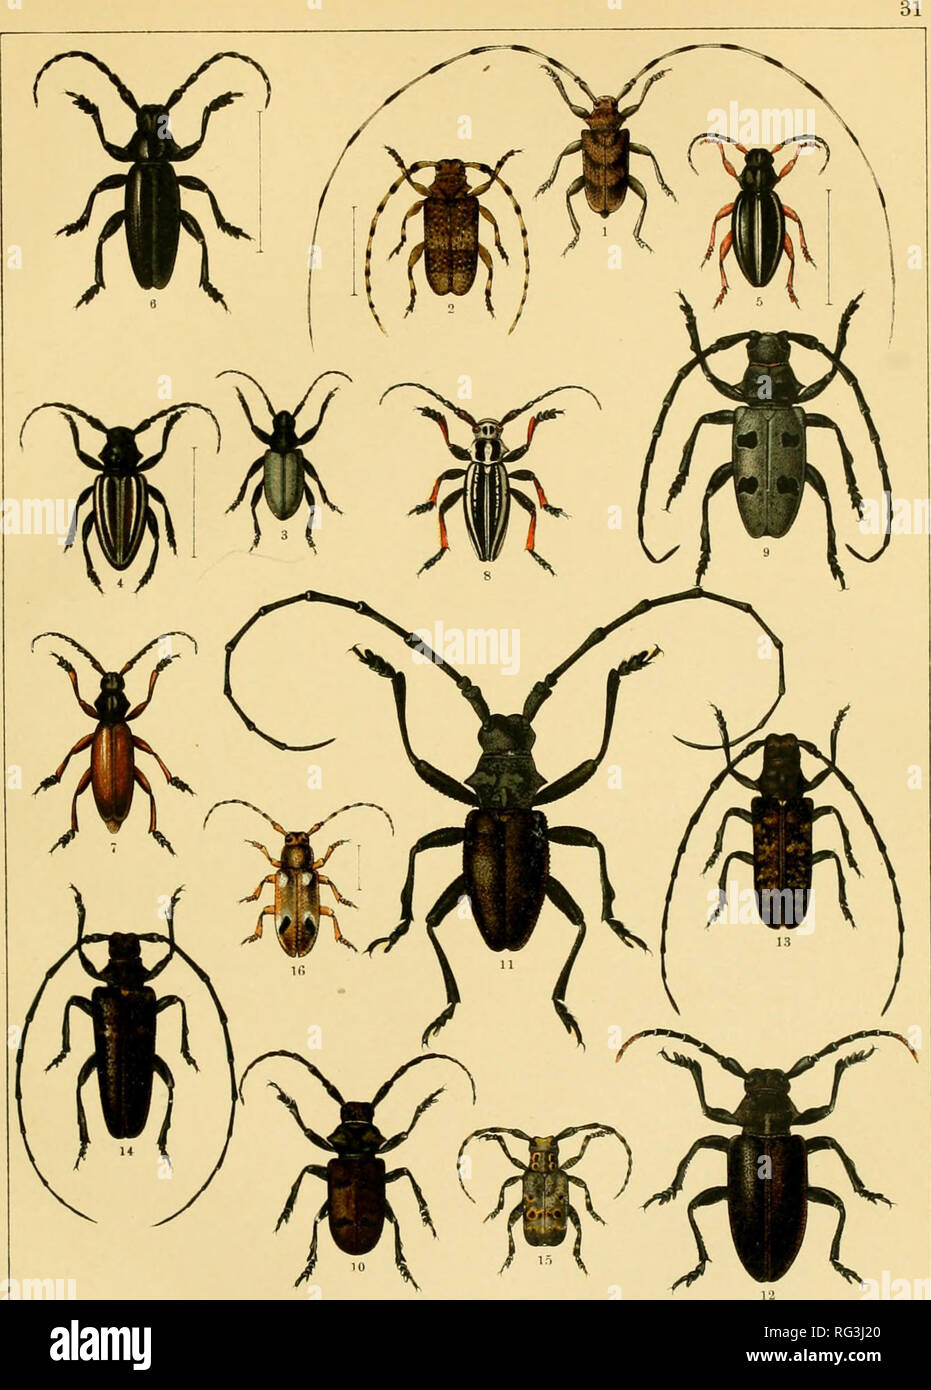 . Calwers Käferbuch; einfürhrung in die kenntnis der käfer Europas. Beetles. 1. Acanthocinus aedilis. 2. Acanth. reticulatus. 3. Dorcadion fuliginator. 4. Dorc. fuliginator var. vitti- gerum. 5. Dorc. pedestrc. 6. Dorc. aethiops. 7. Dorc. fulvum. 8. Dorc. glycyrrhizae. 9. Morimus funereus. 10. Dorcatypus tristis. II. Morimus asper. 12. Lamia textor. 13. Monochamus sutor. 14. Mon. sartor 15. Haplocnemia curculionoides. 16. Albana M-griseum.. Please note that these images are extracted from scanned page images that may have been digitally enhanced for readability - coloration and appearance of t Stock Photo